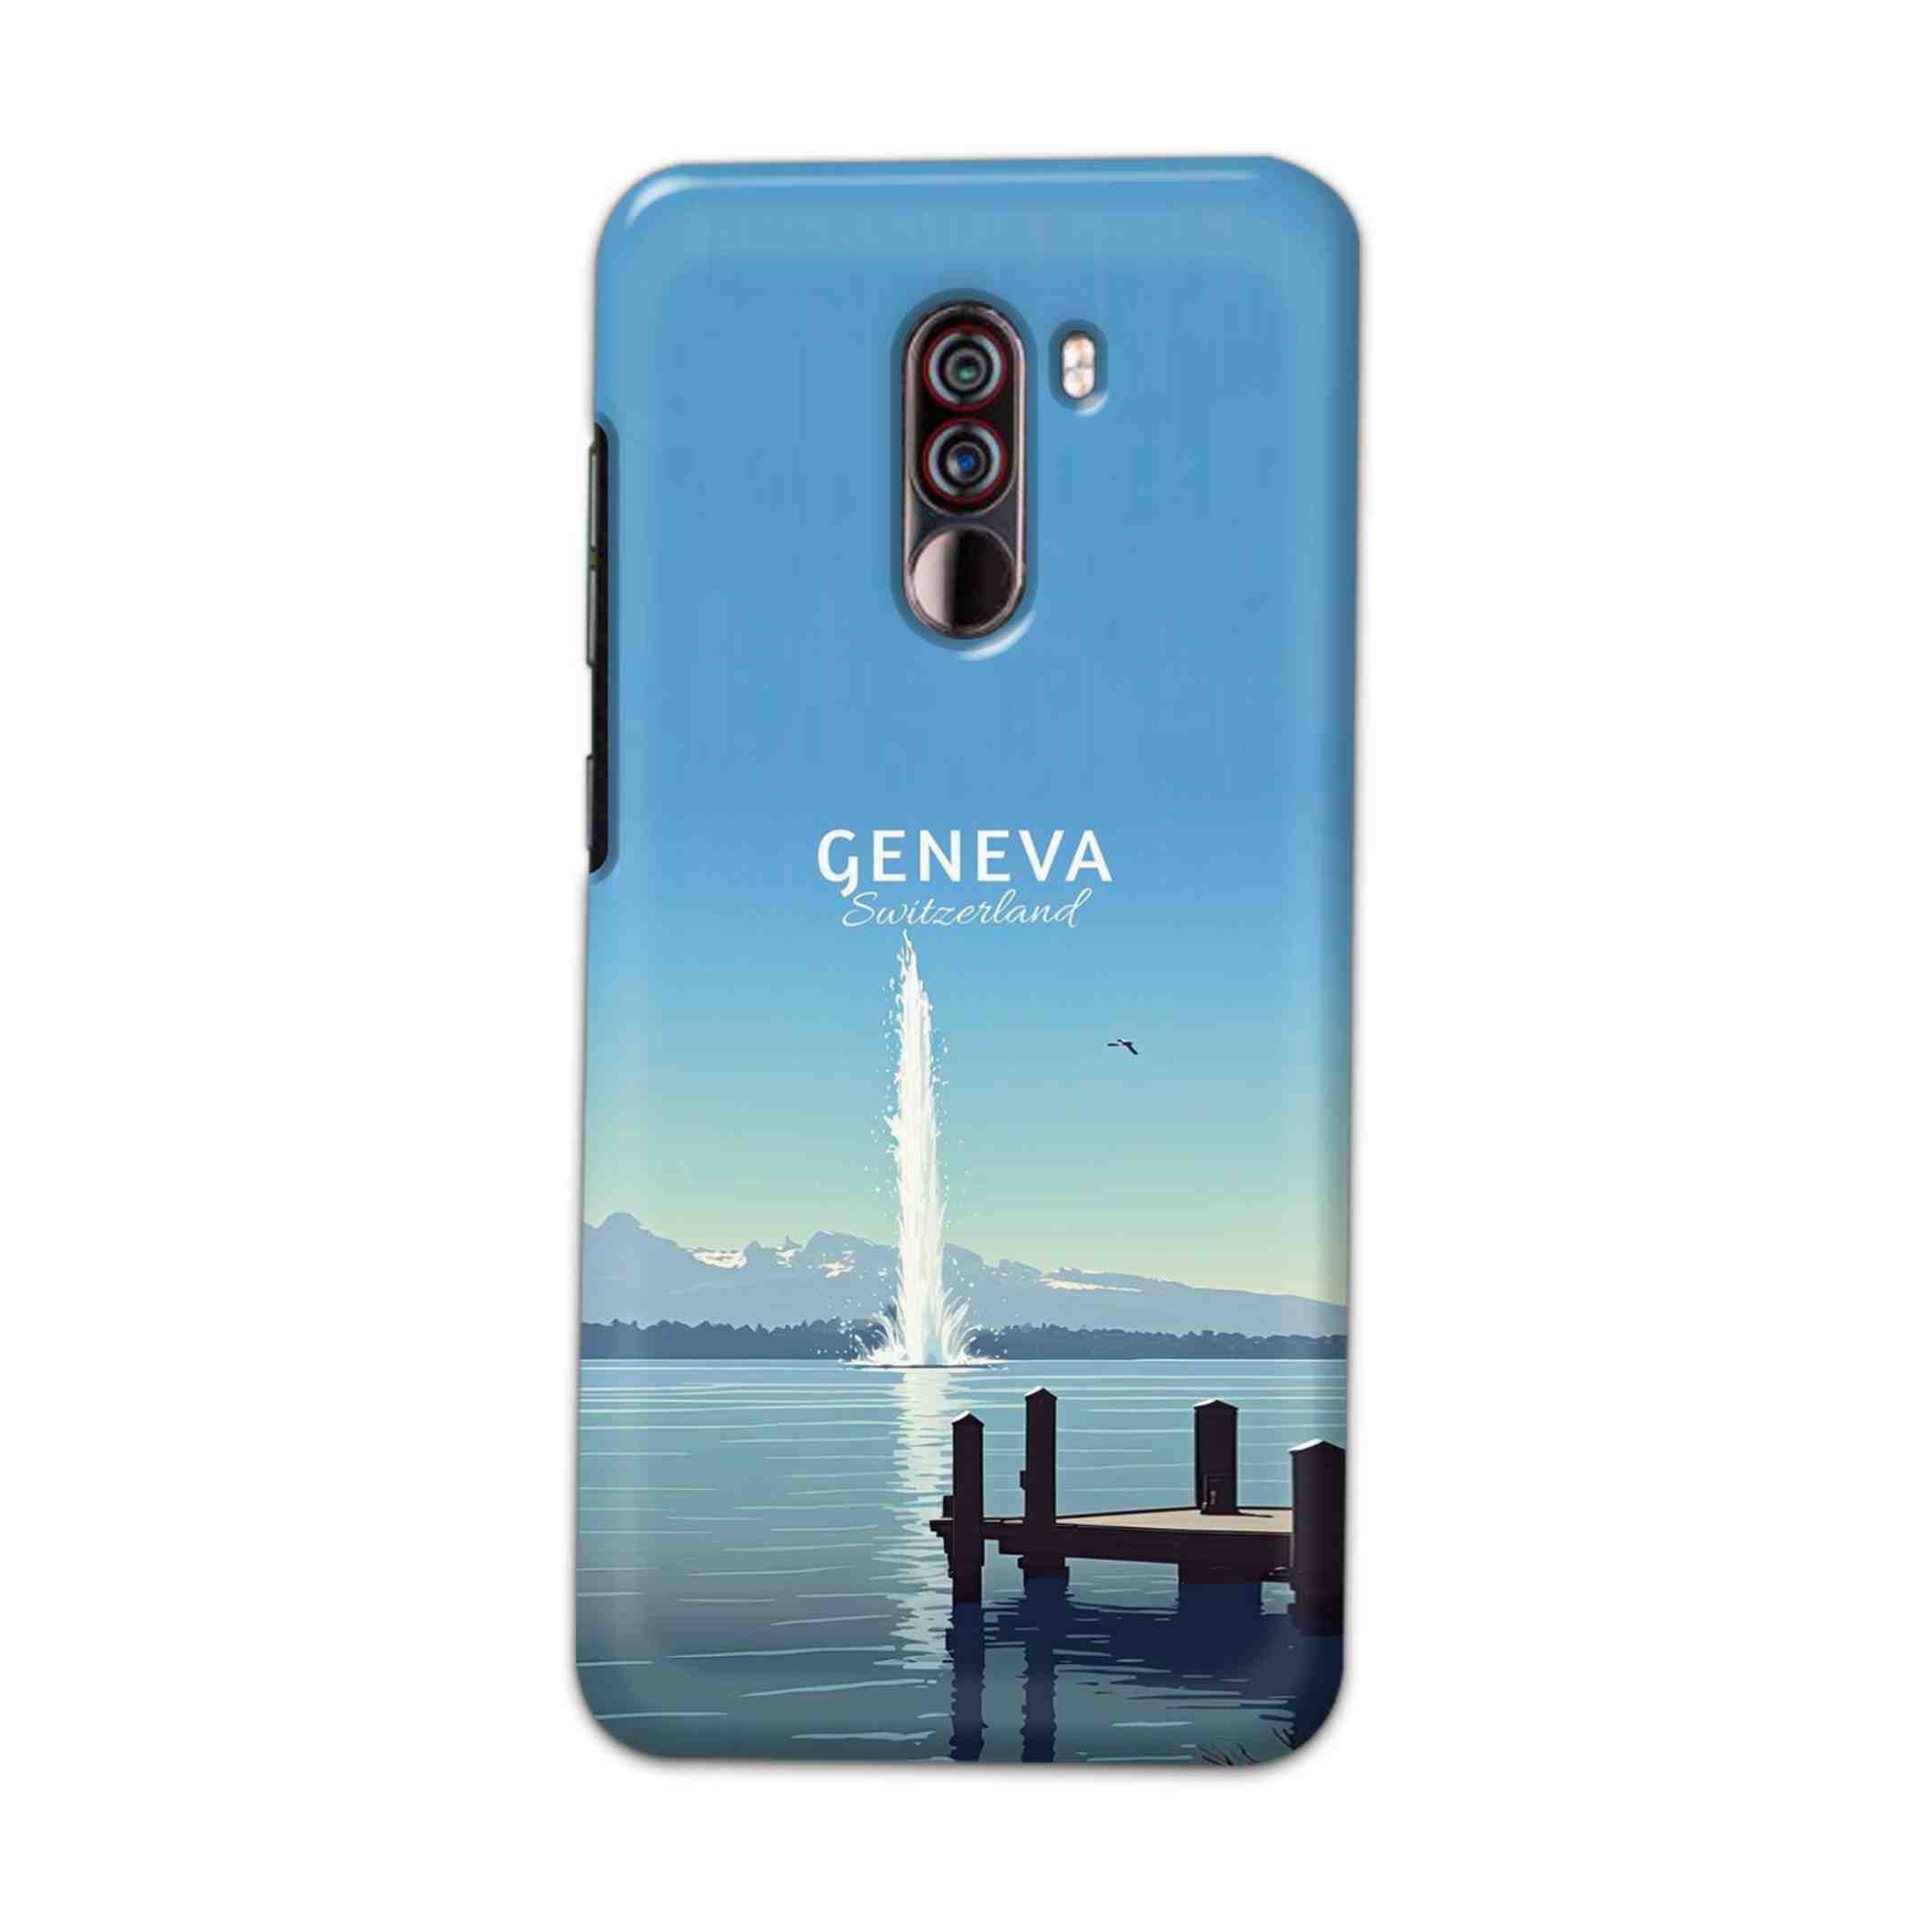 Buy Geneva Hard Back Mobile Phone Case Cover For Xiaomi Pocophone F1 Online